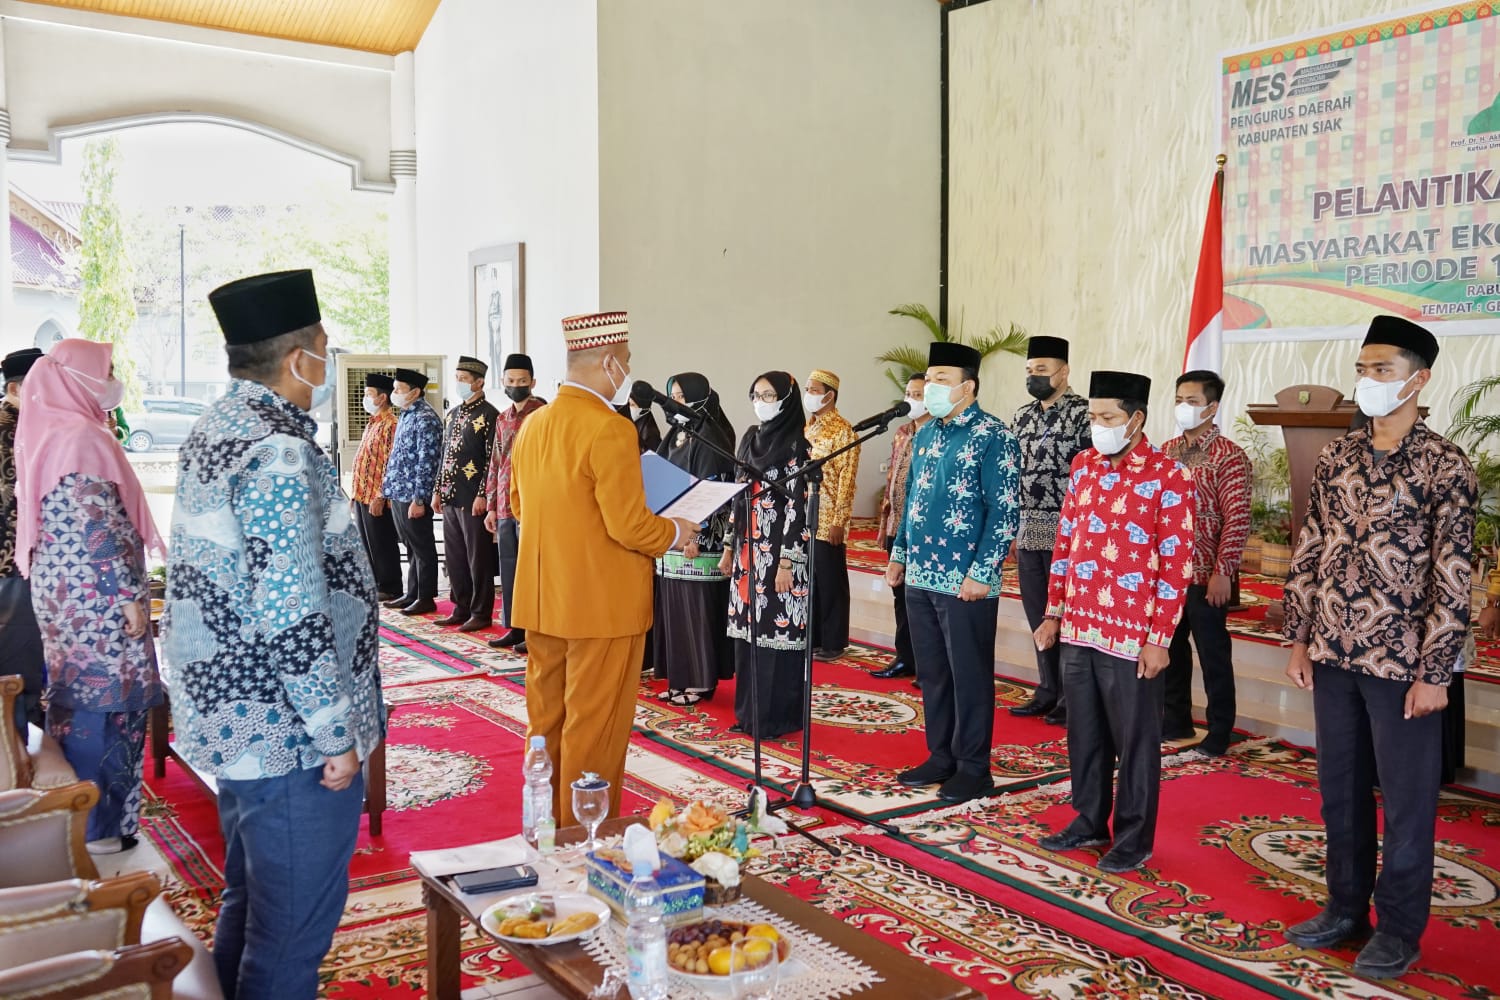 51 Orang Pengurus Daerah Masyarakat Ekonomi Syariah (MES) Kabupaten Siak Resmi Dilantik